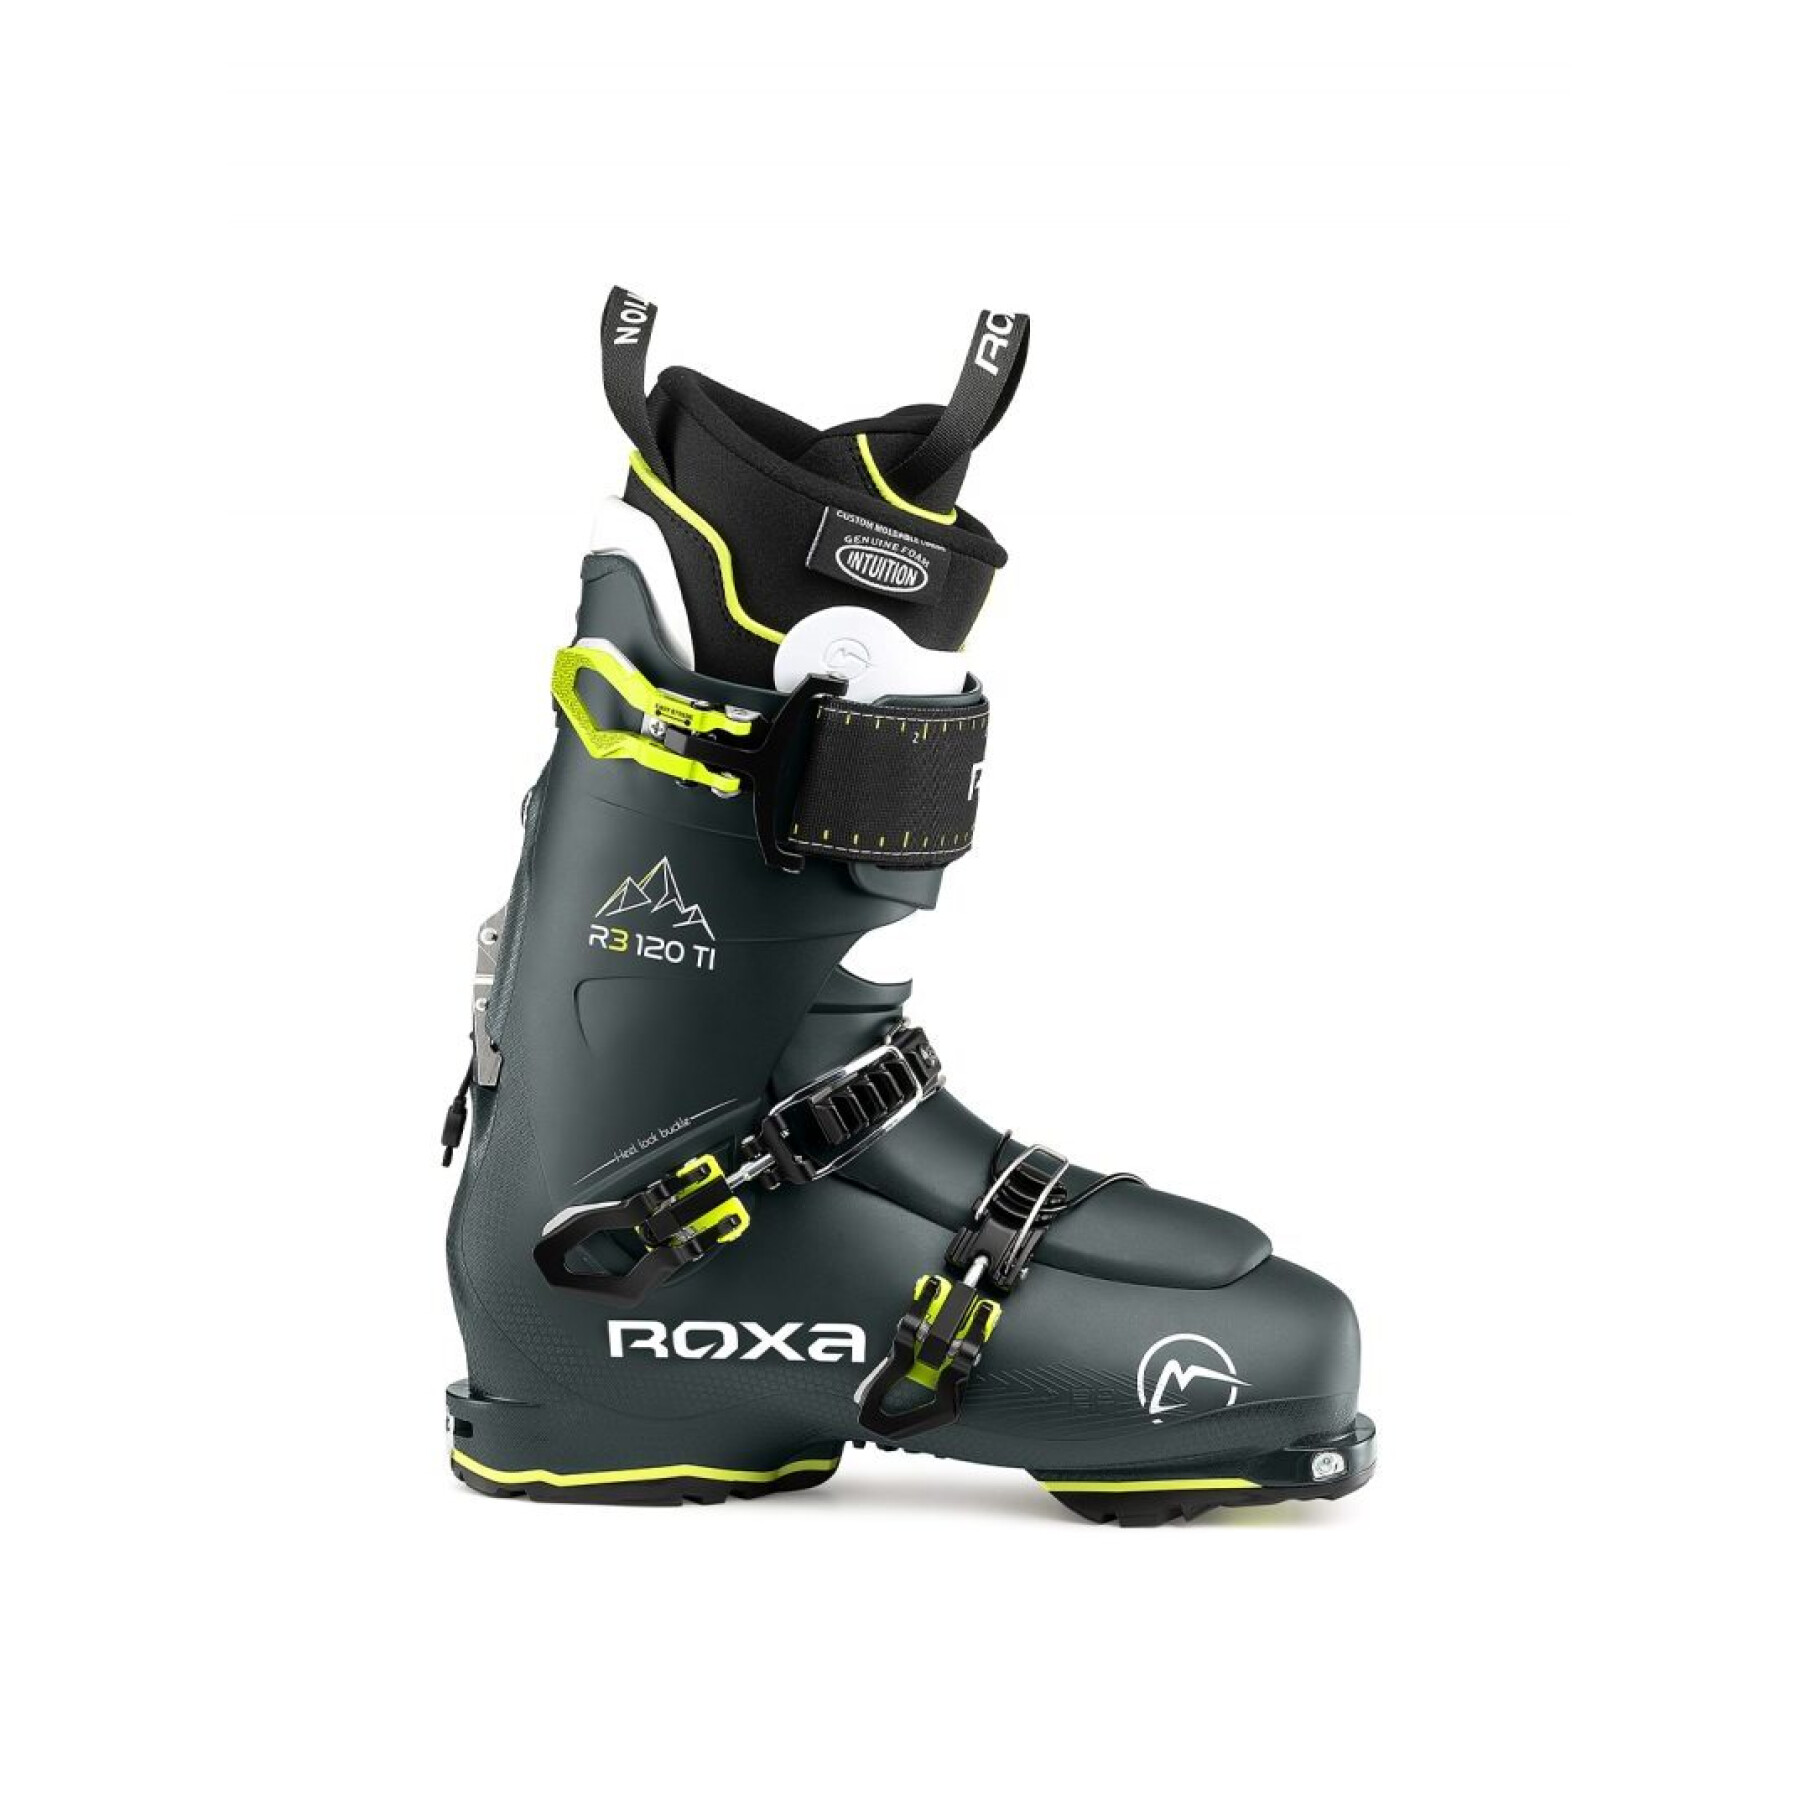 Chaussures de ski Roxa R3 120 TI IR